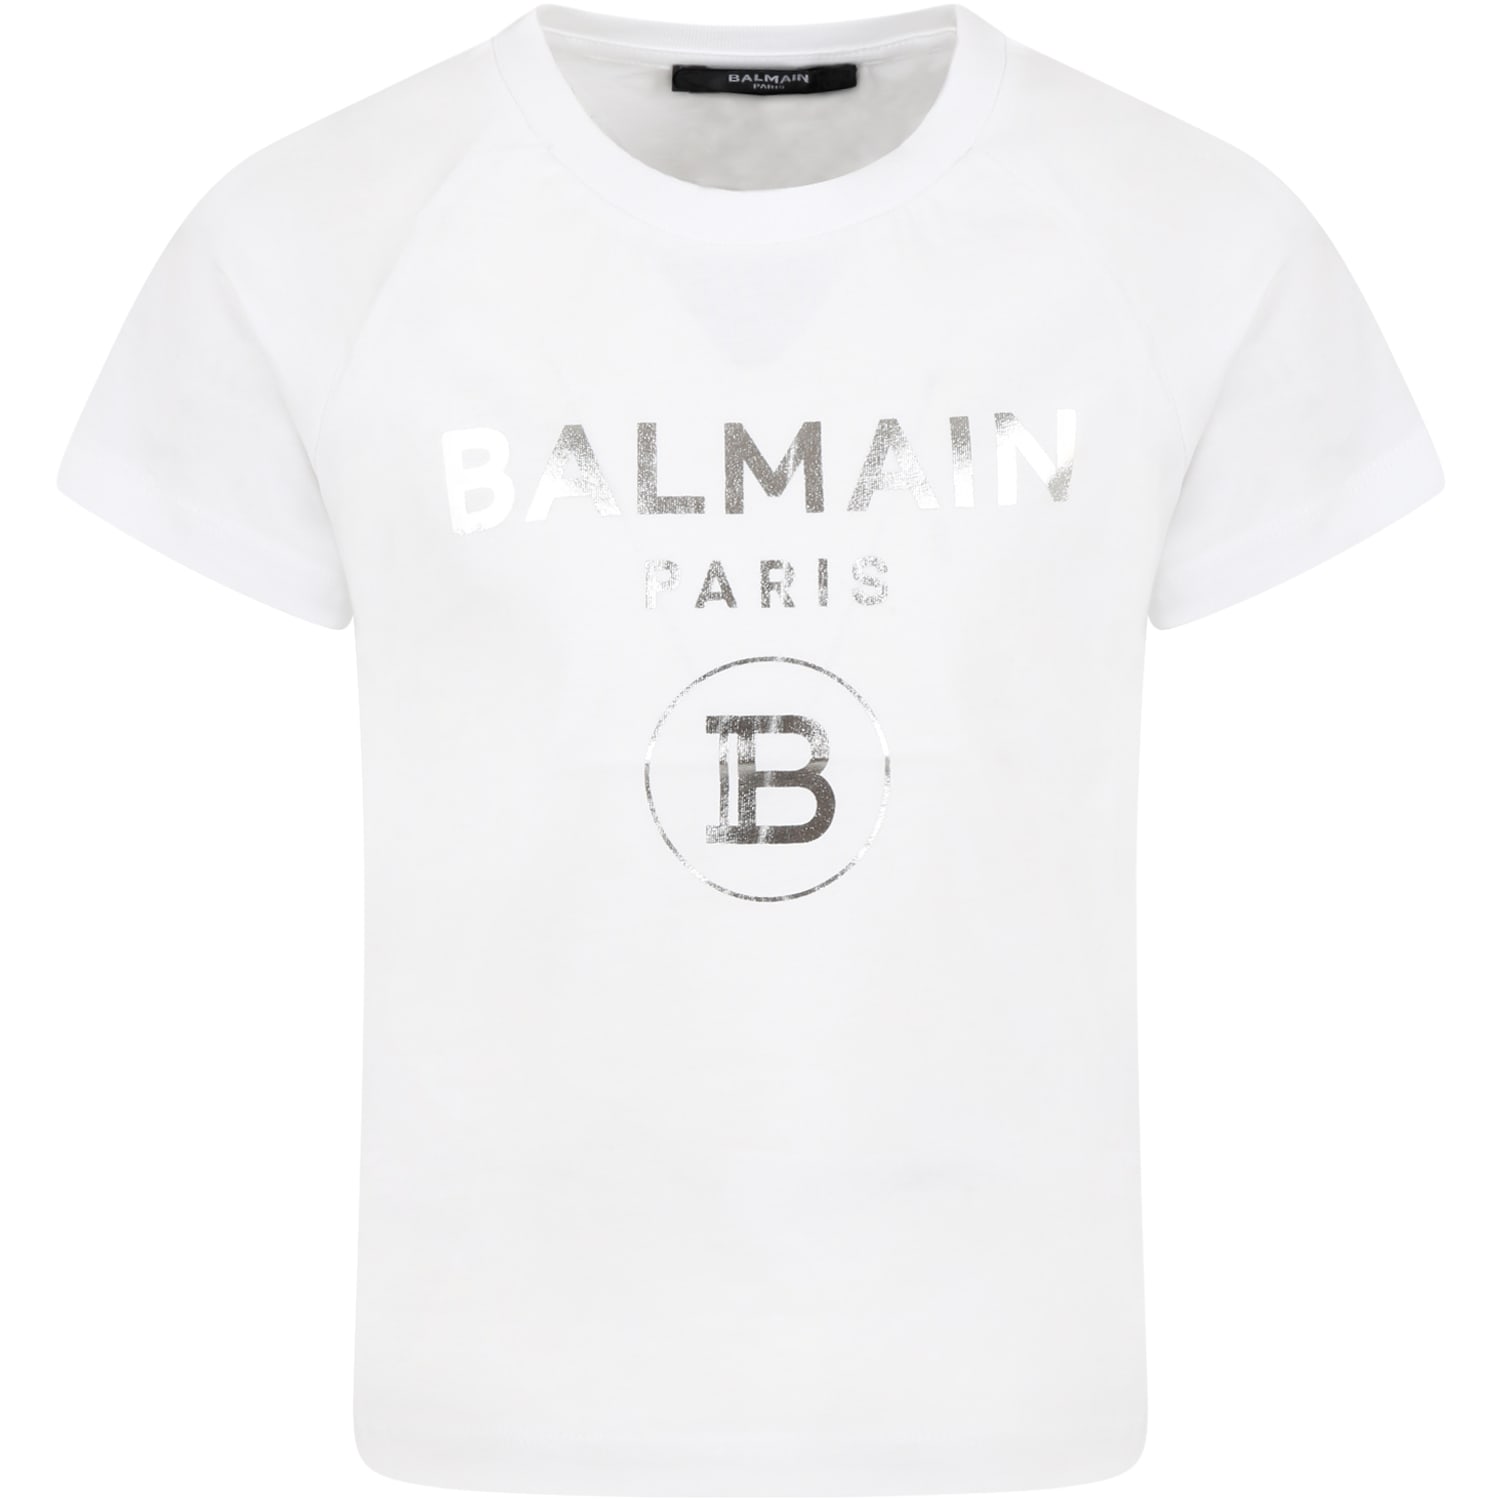 BALMAIN WHITE T-SHIRT FOR KIDS WITH DOUBLE LOGO,6O8101 OX390 100AG